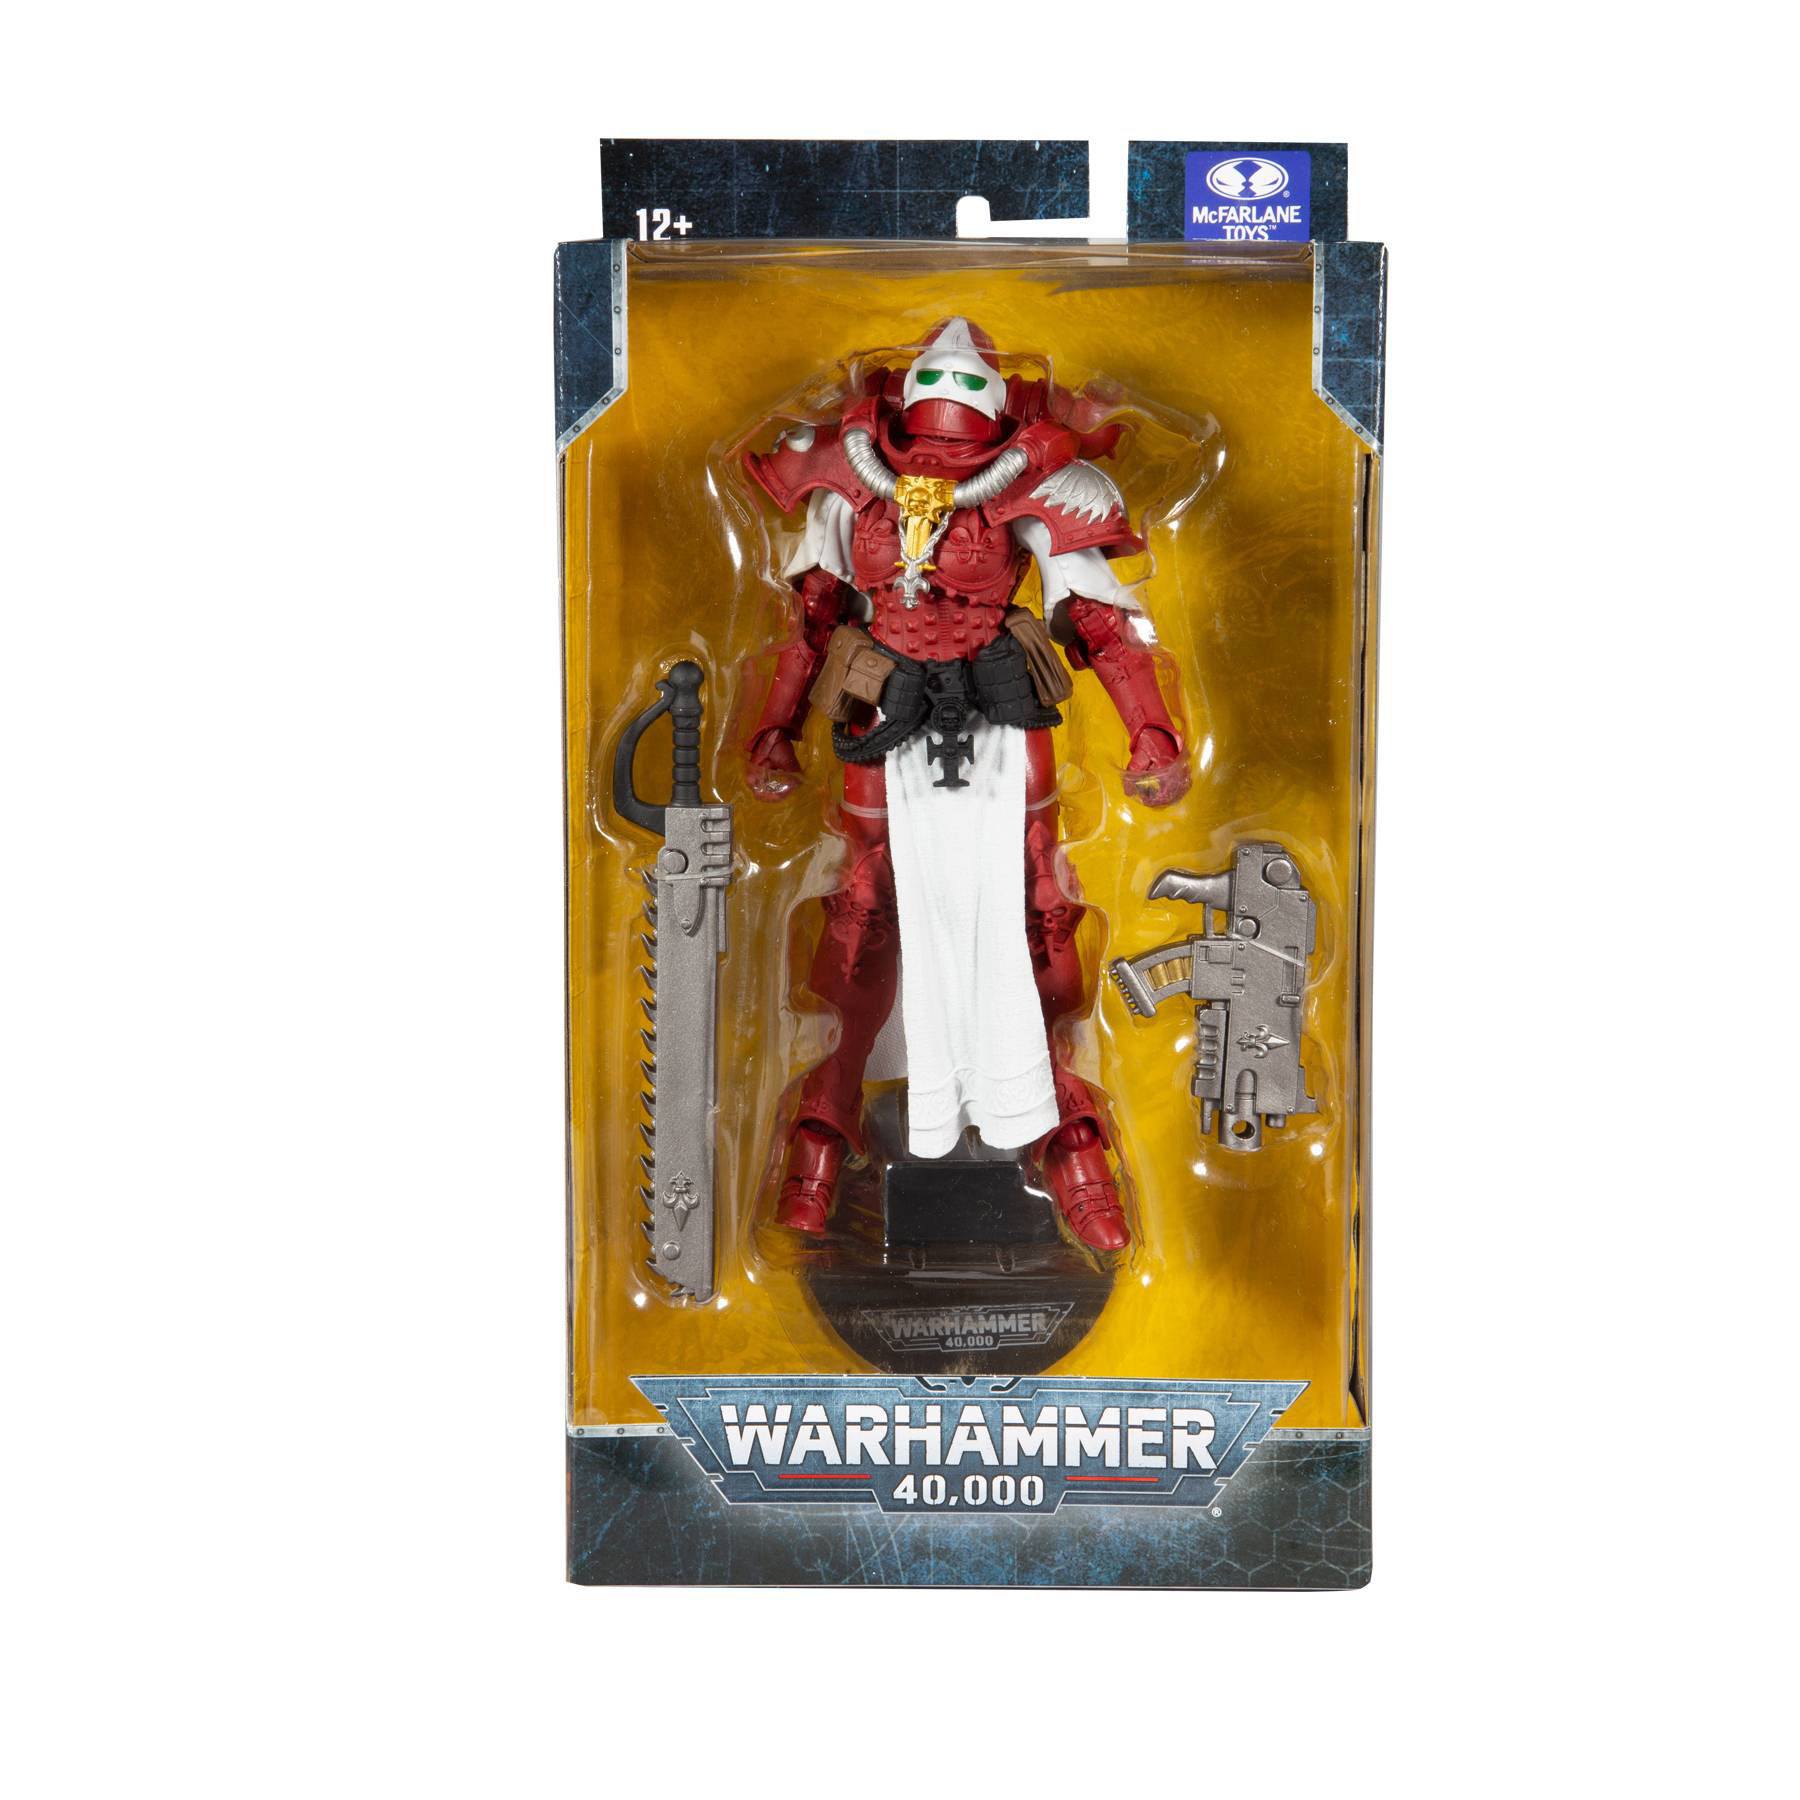 Warhammer 40k Actionfigur Adepta Sororitas Battle Sister (Order of The Bloody Rose) 18 cm MCF10922 787926109221